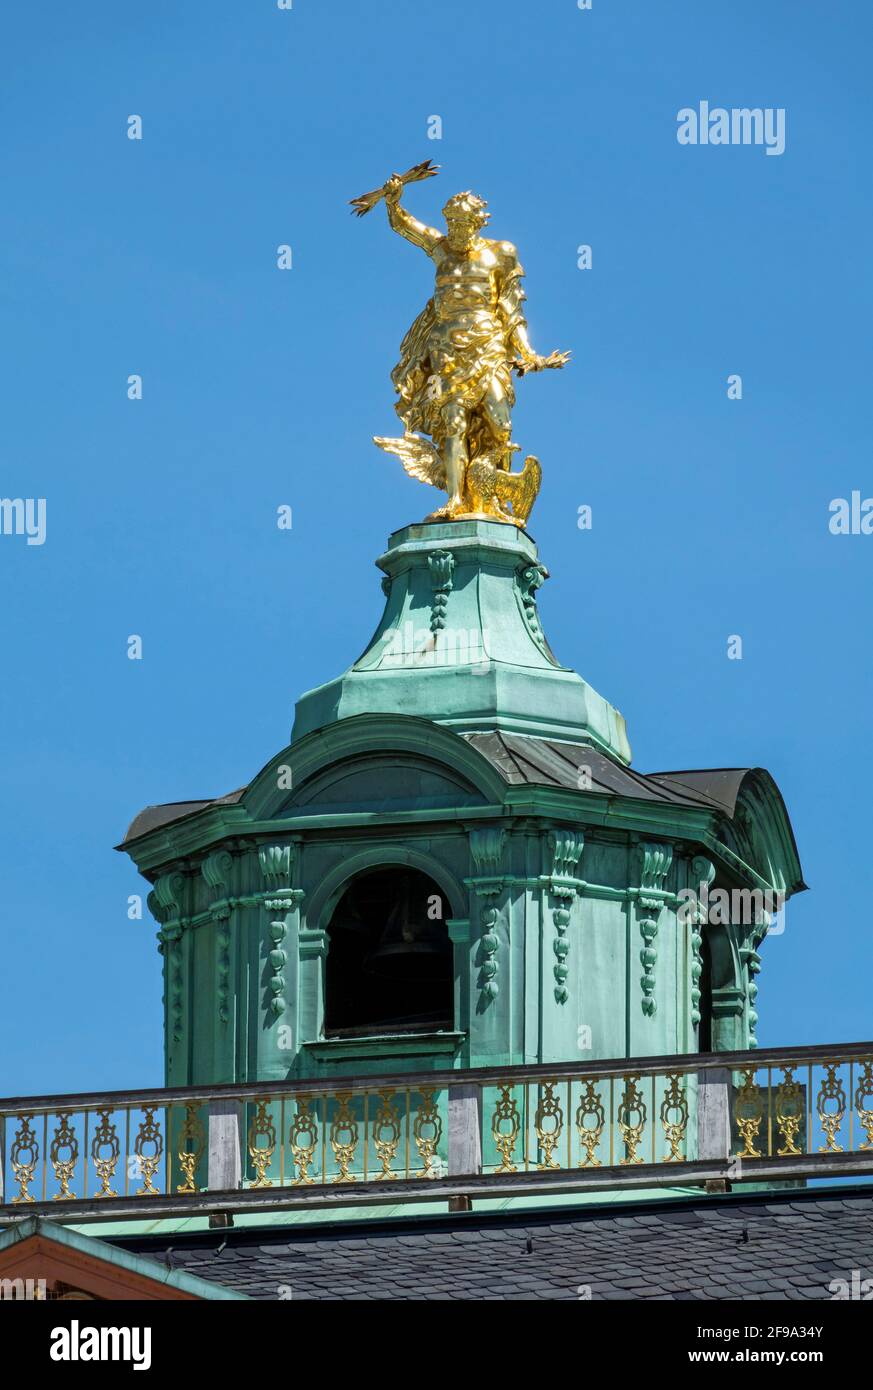 Germany, Baden-Wuerttemberg, Rastatt, residential palace, god Jupiter hurls lightning bolts from the roof. Popularly known as the 'Golden Man'. Stock Photo